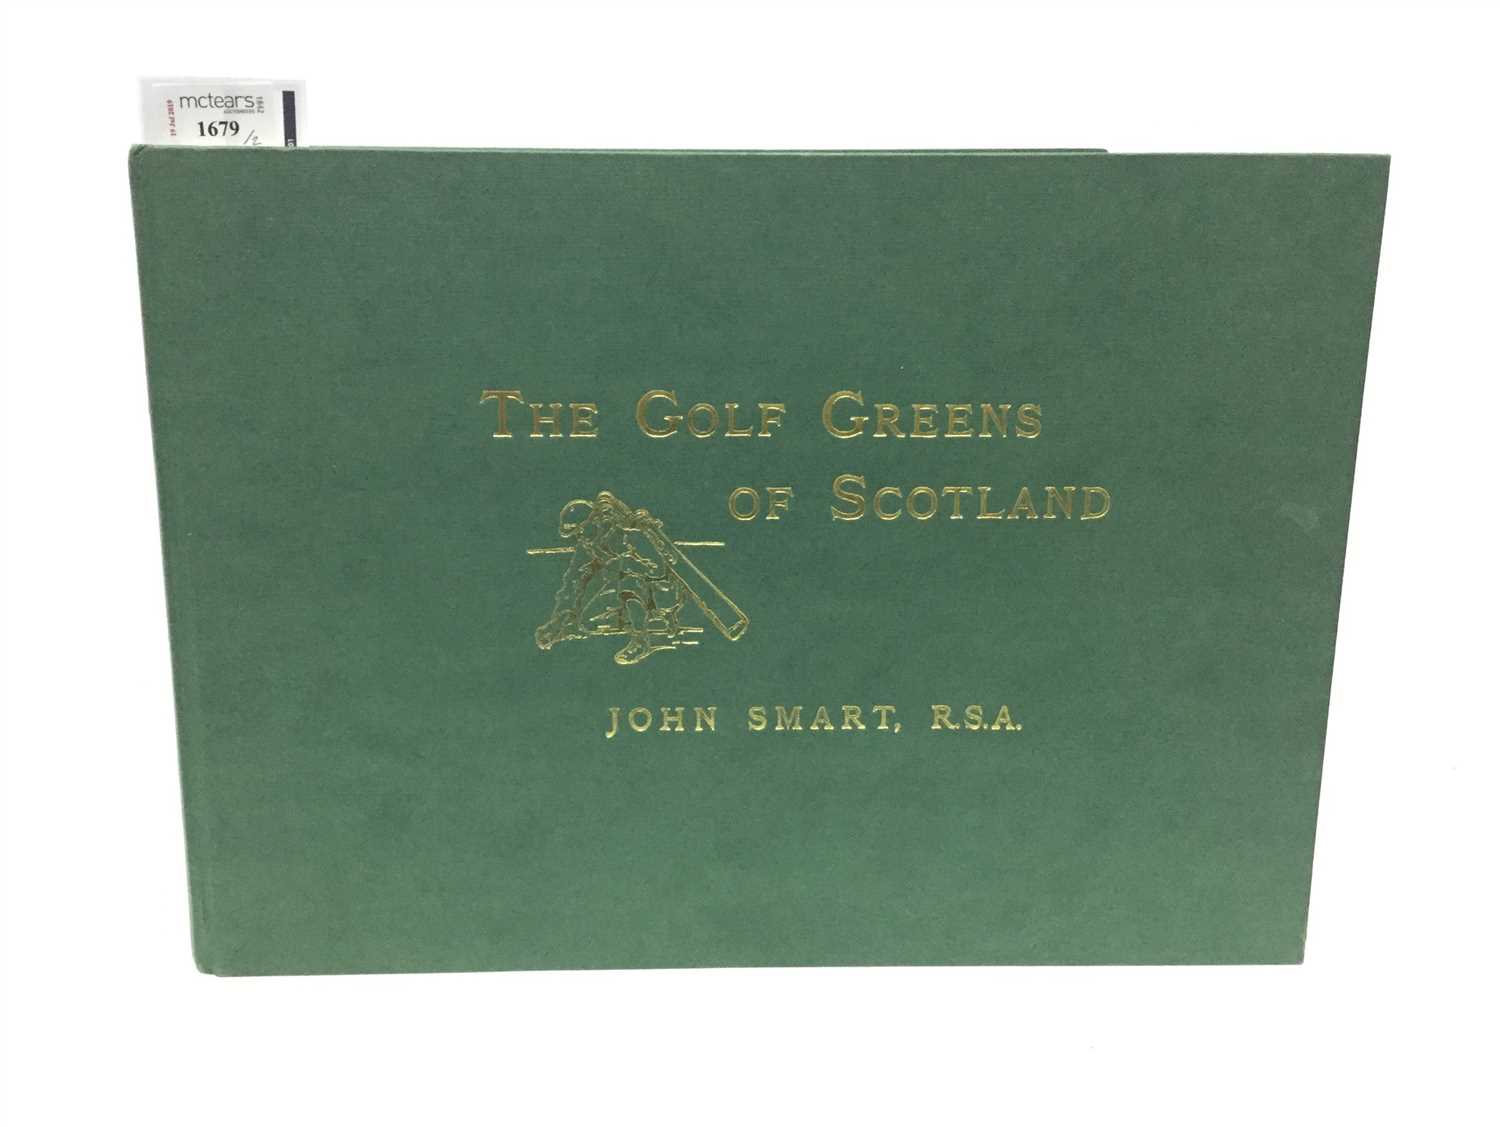 Lot 1679 - THE GOLF GREENS OF SCOTLAND, BY JOHN SMART RSA